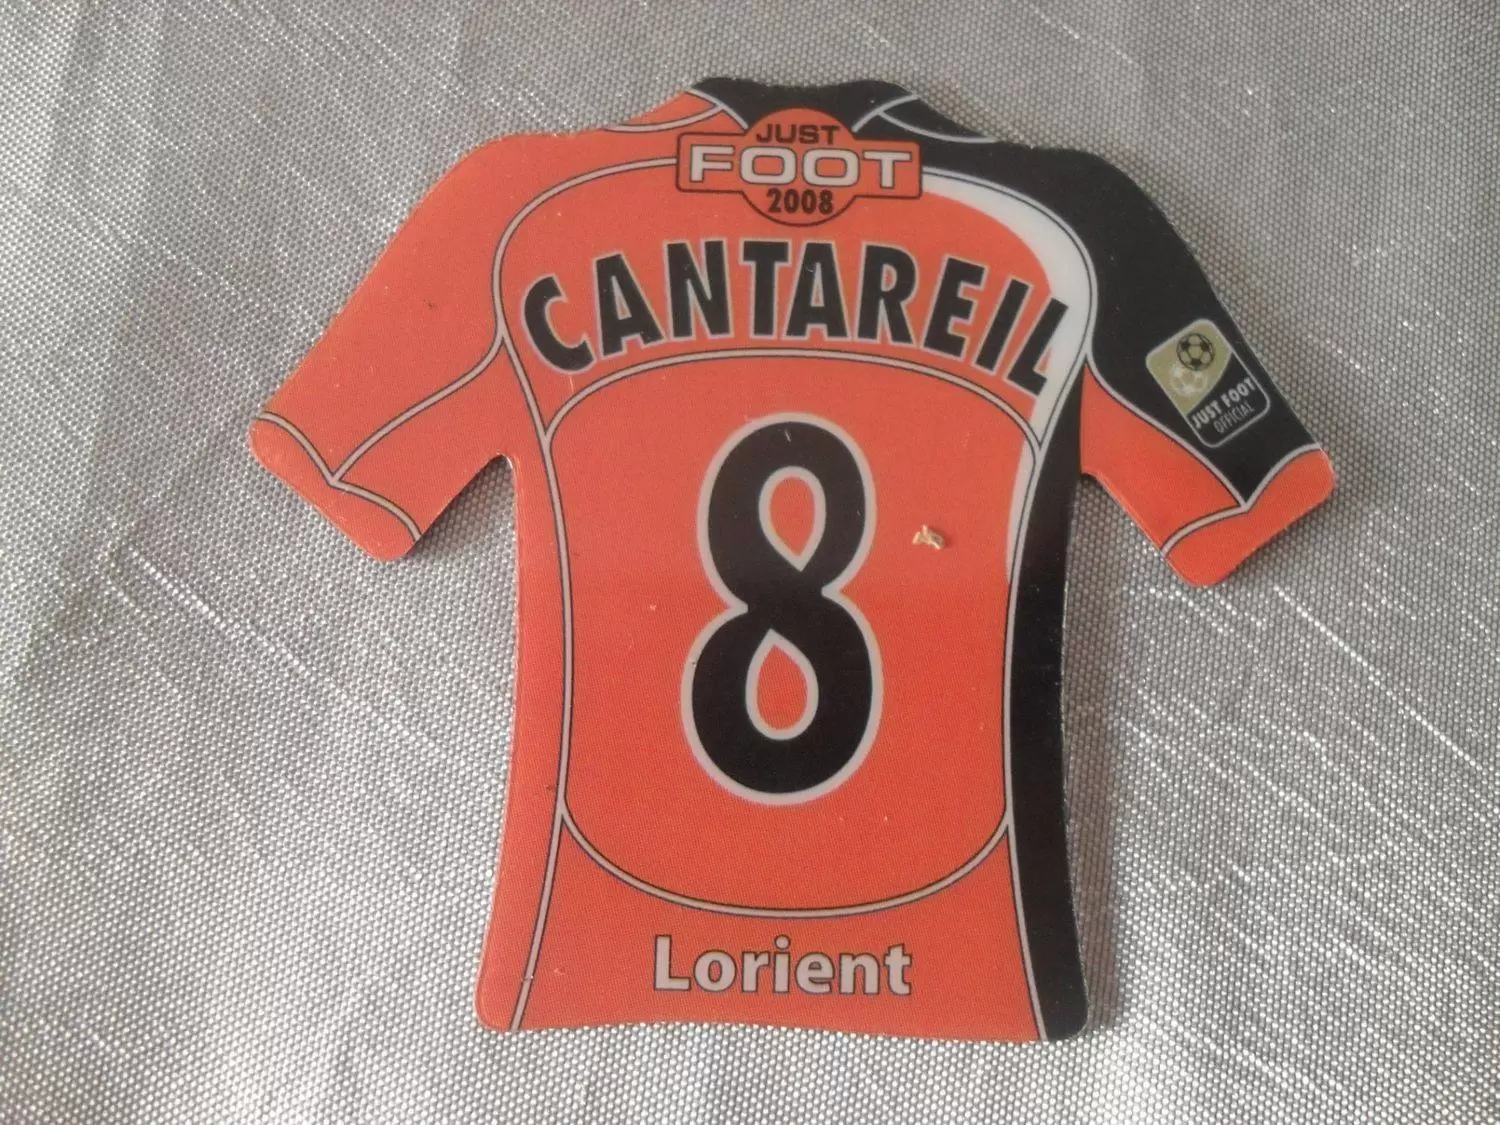 Just Foot 2008 - Lorient 8 - Cantareil